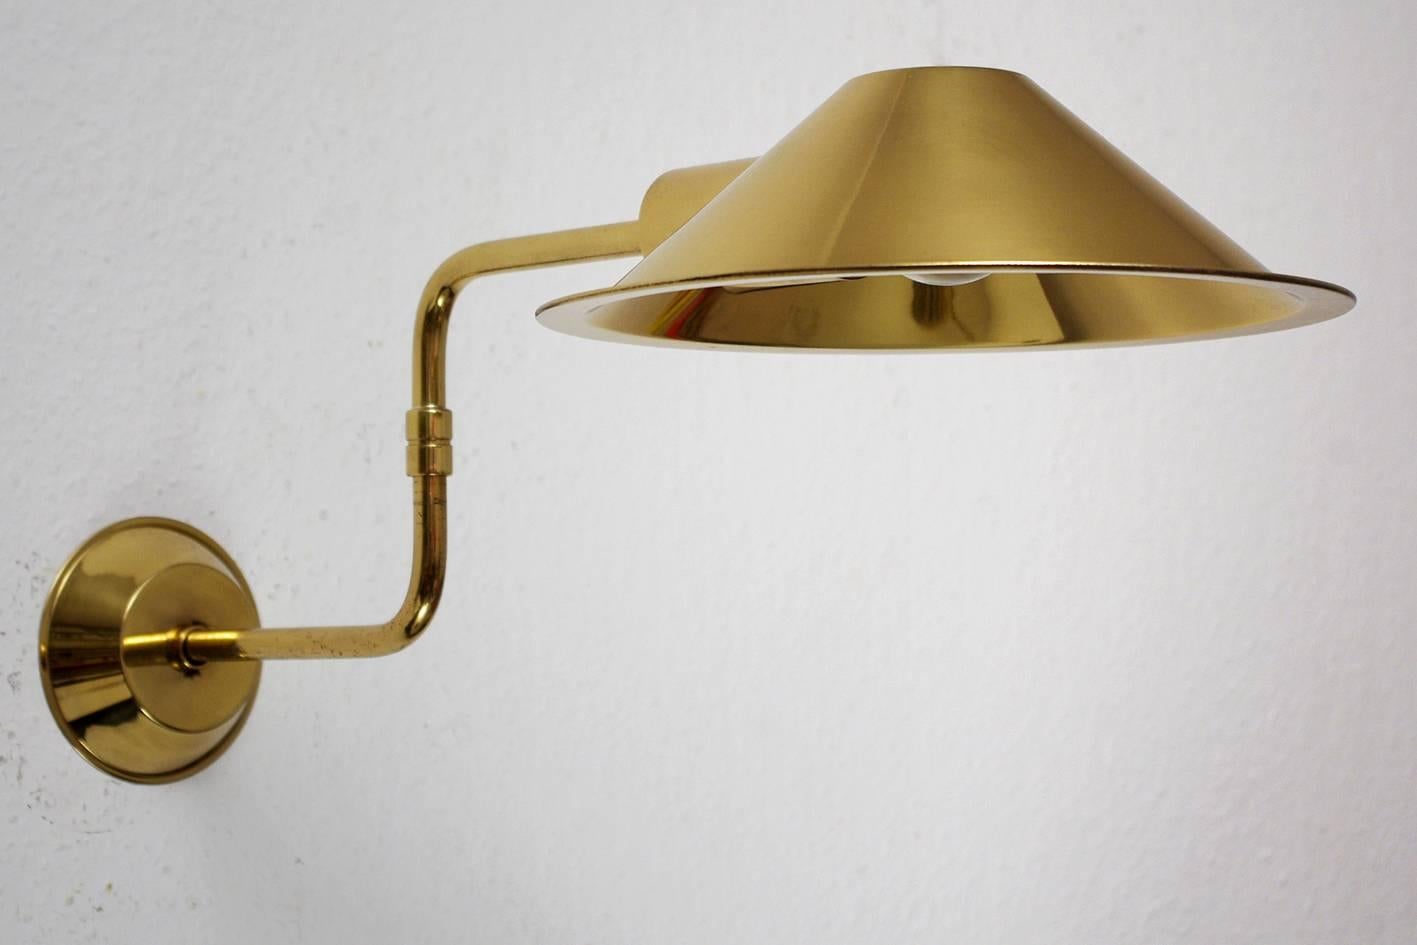 Elegant articulating wall light by Vereinigte Werkstatten.
Germany, 1960s.

Lamp sockets: 1x E27 (US E26).